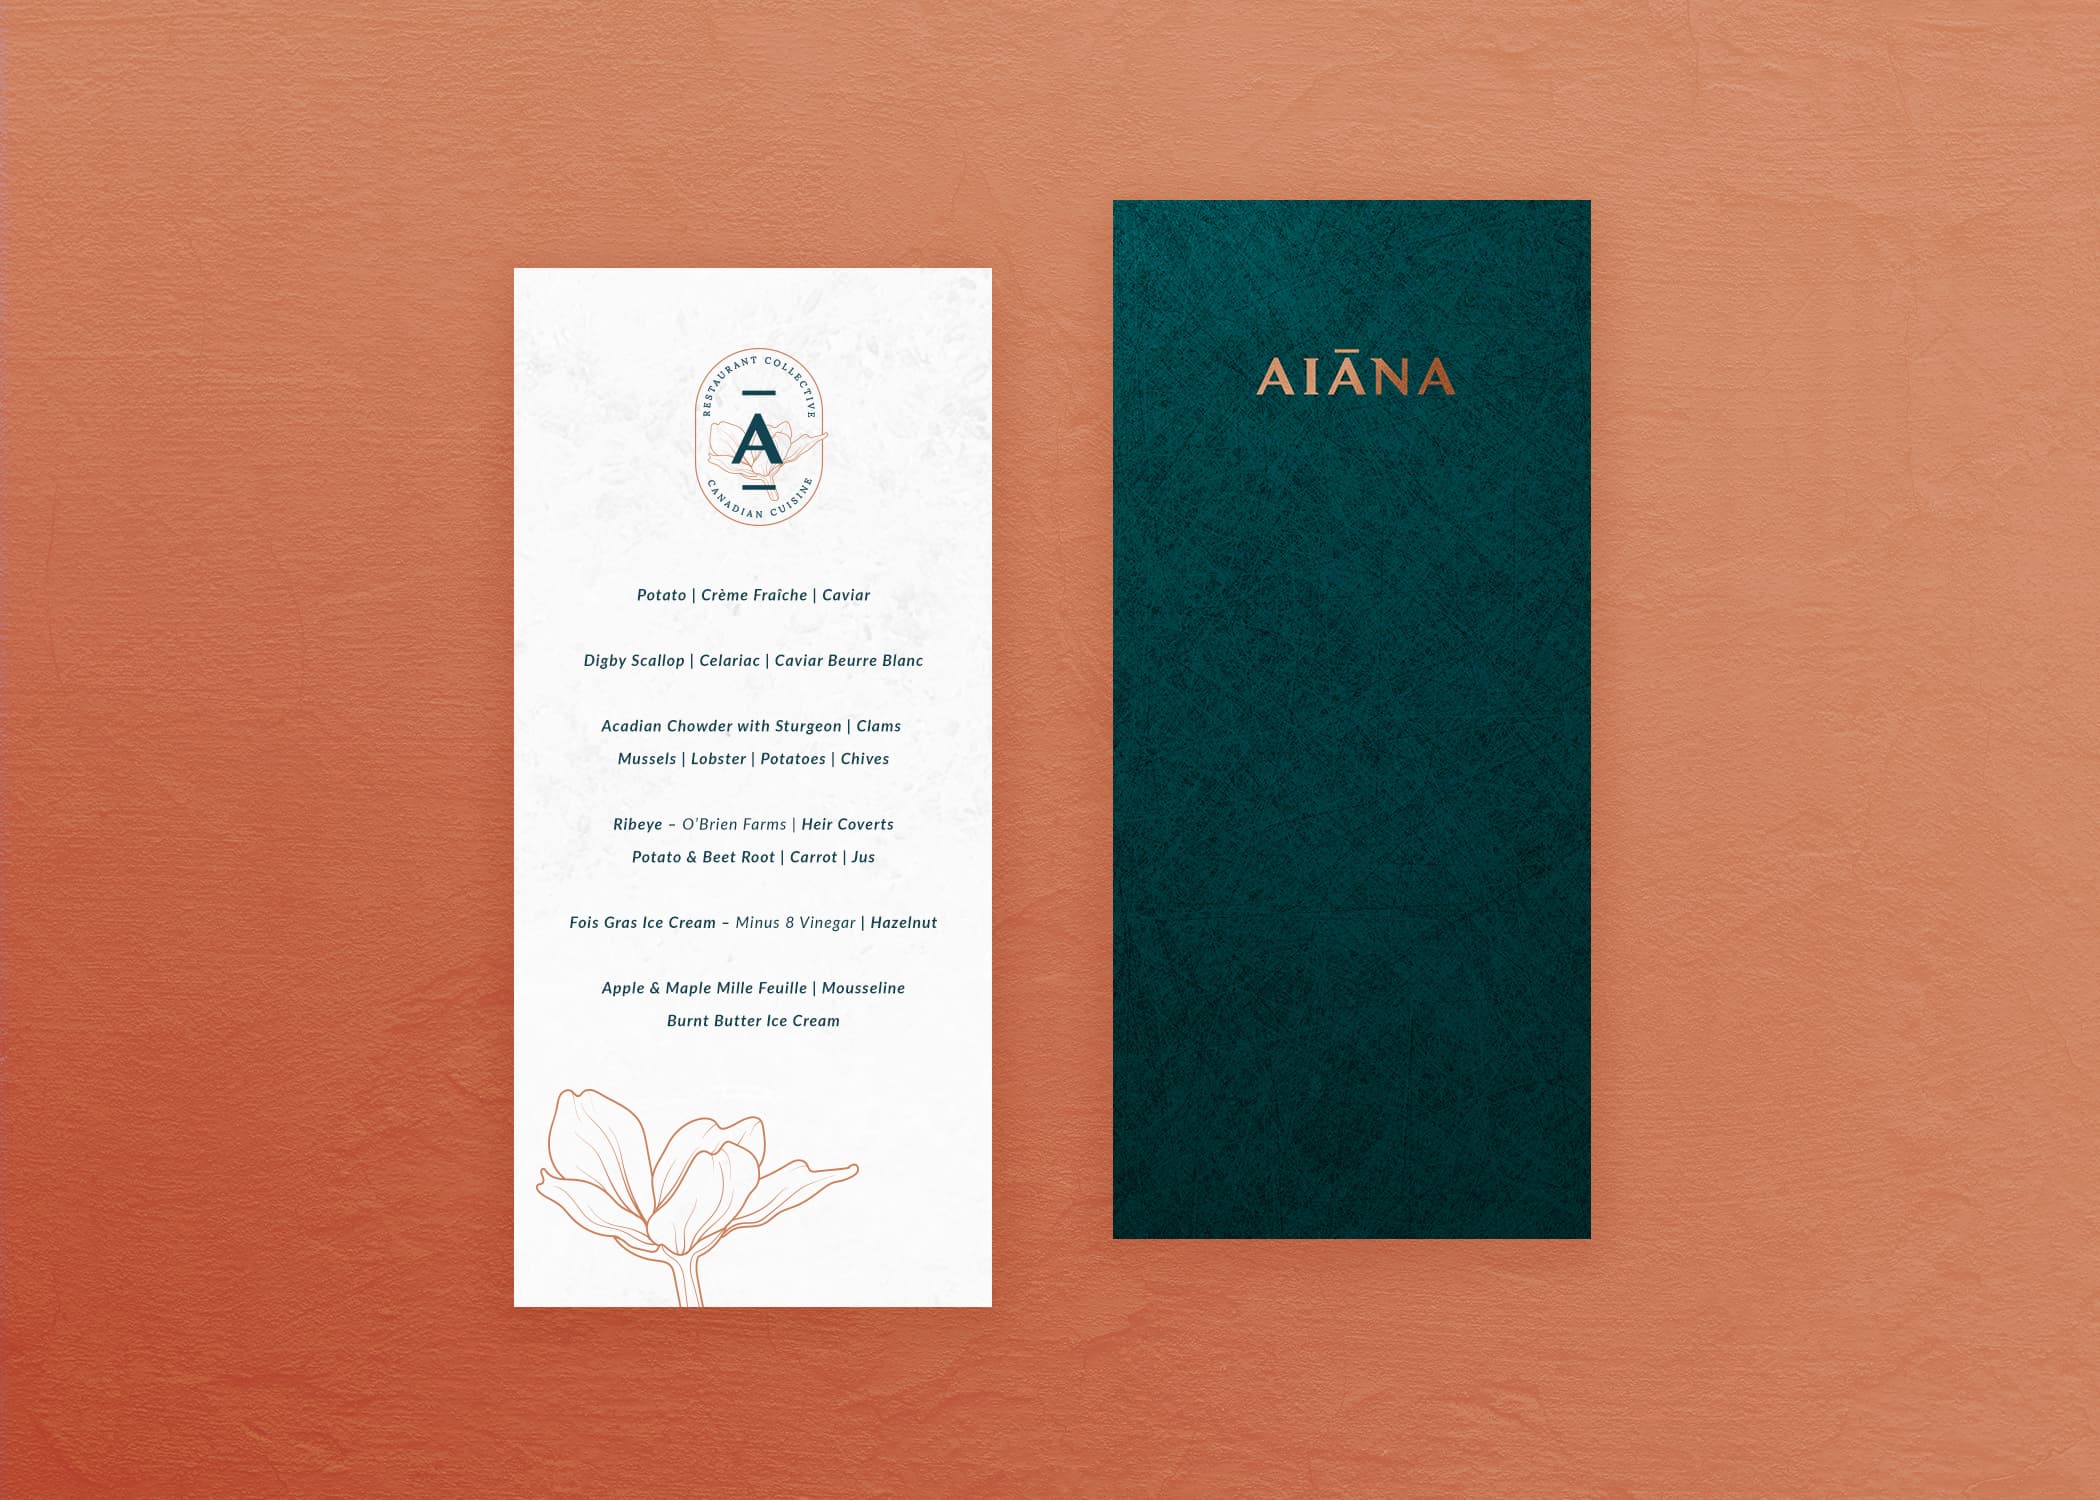 Aiana's menu